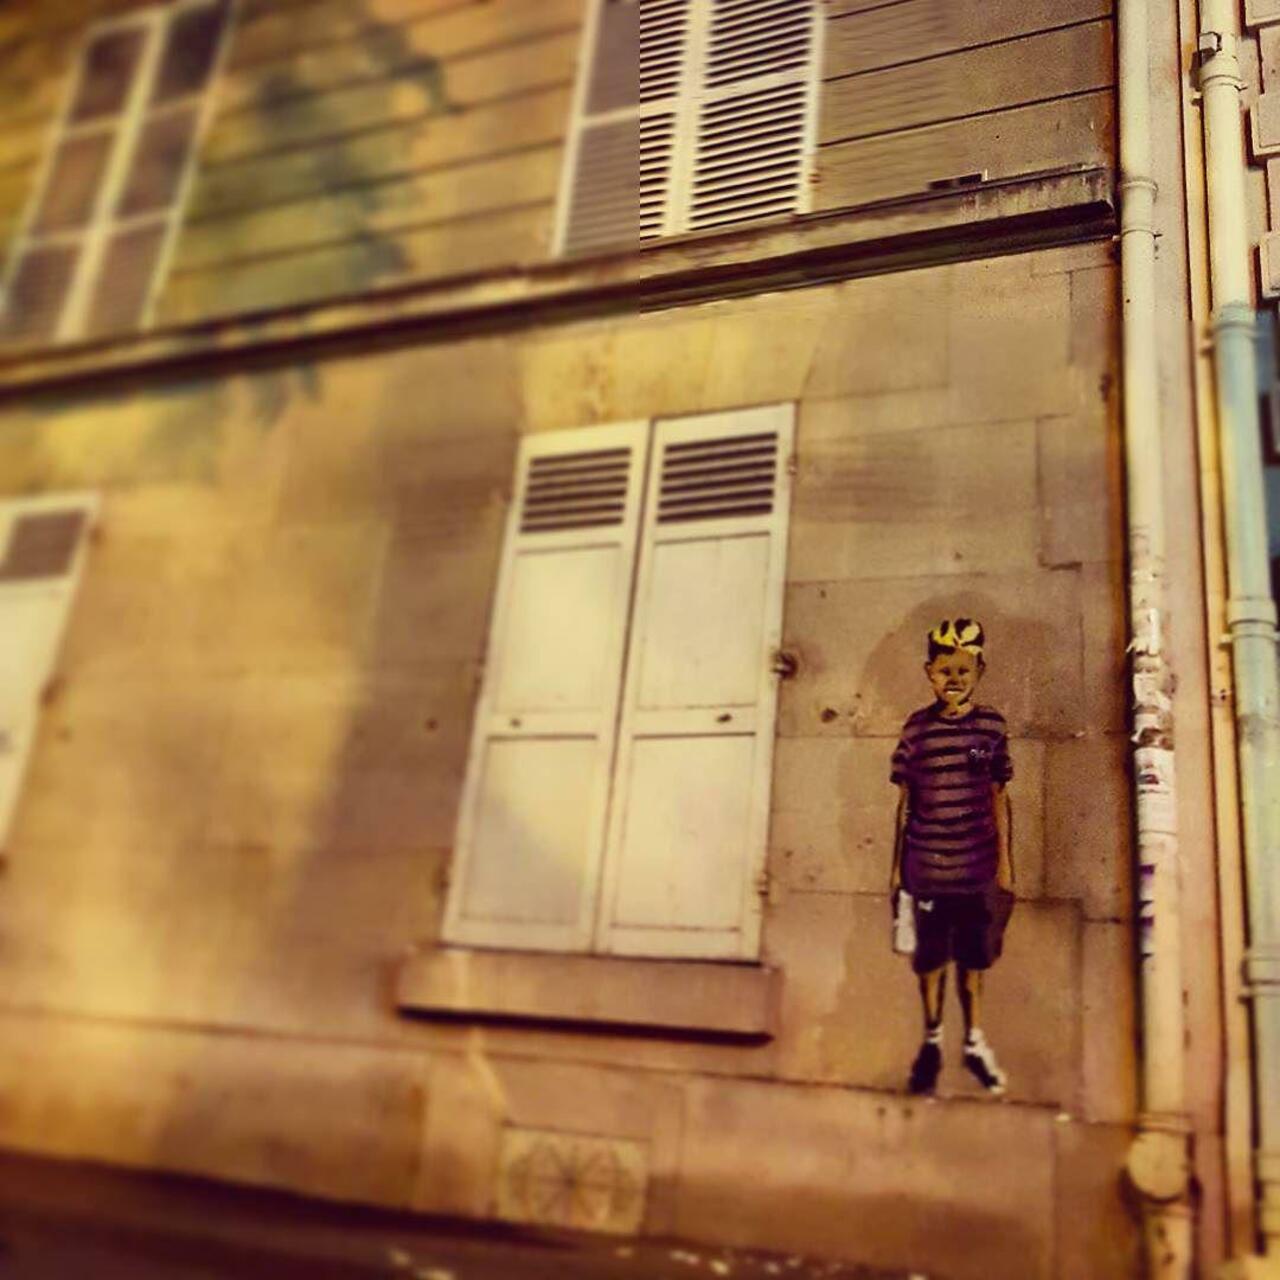 #Paris #graffiti photo by @the169 http://ift.tt/1Z8EYOd #StreetArt http://t.co/4KAim2CJeD